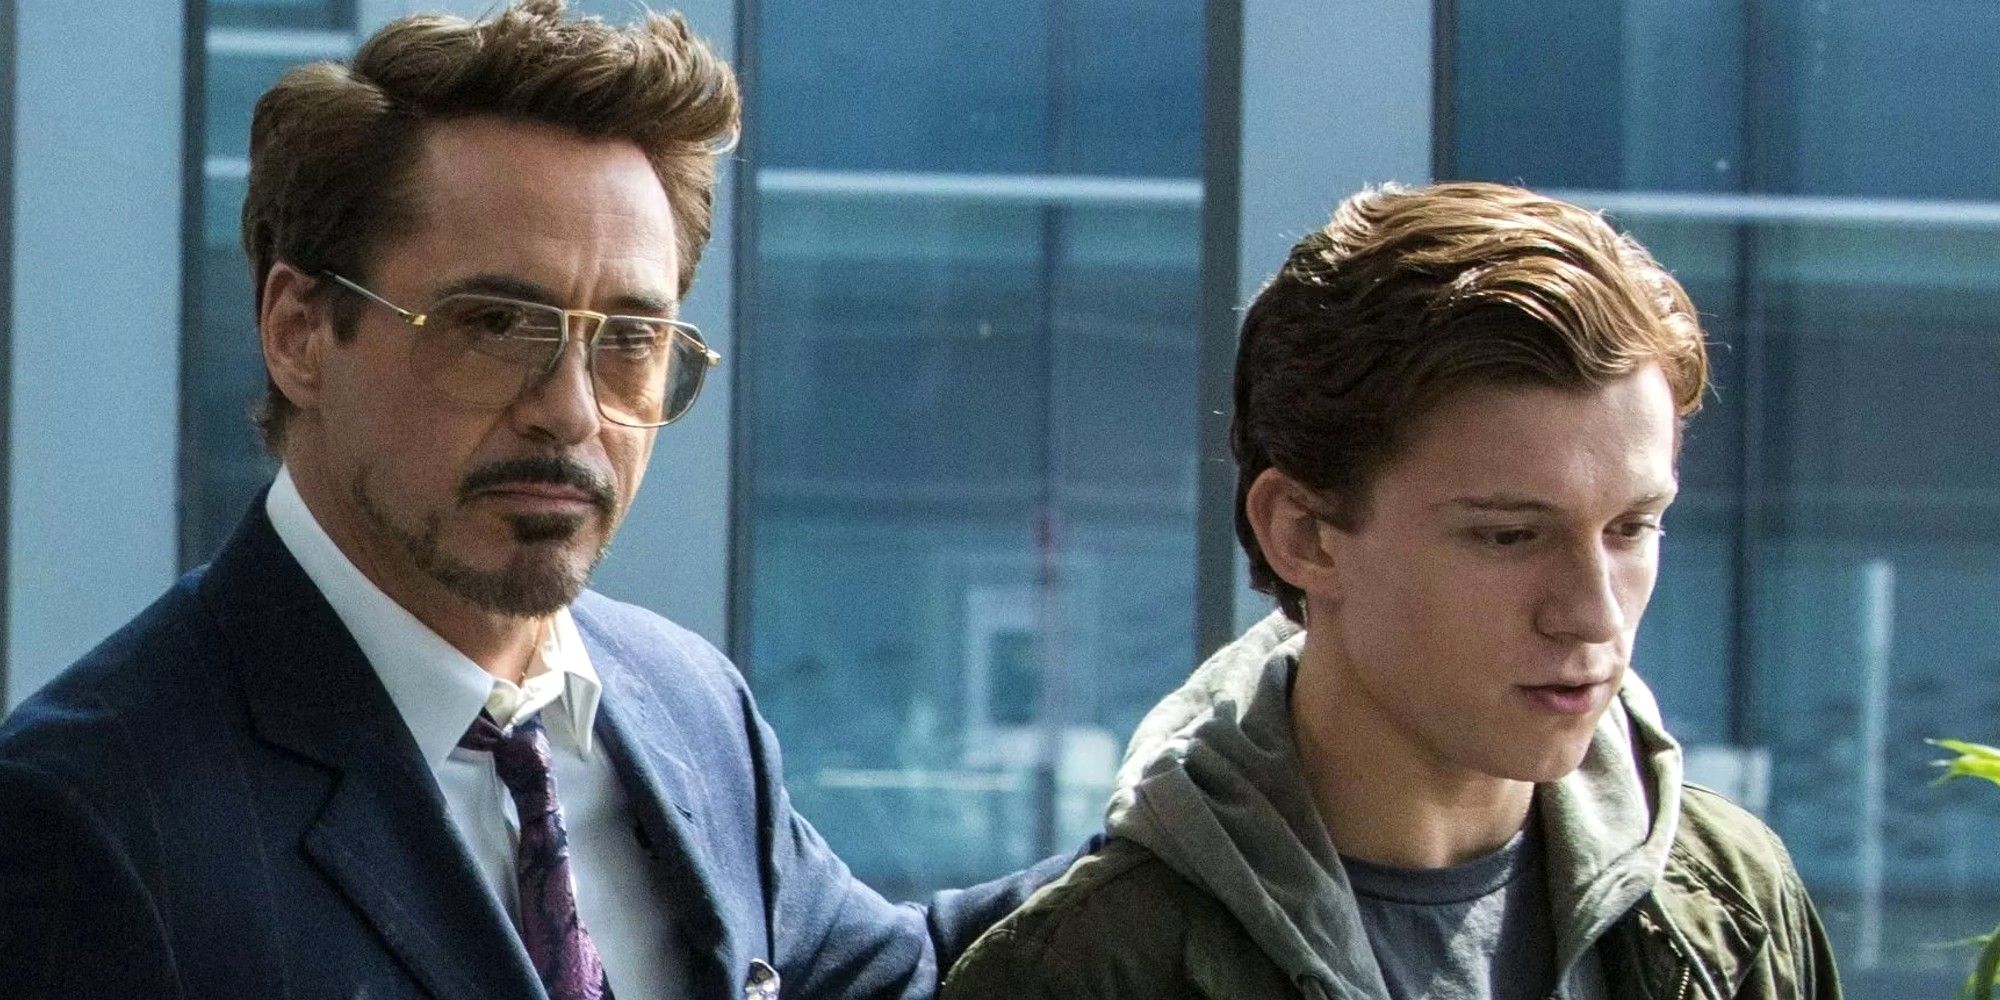 Tony Stark giving Peter Parker advice